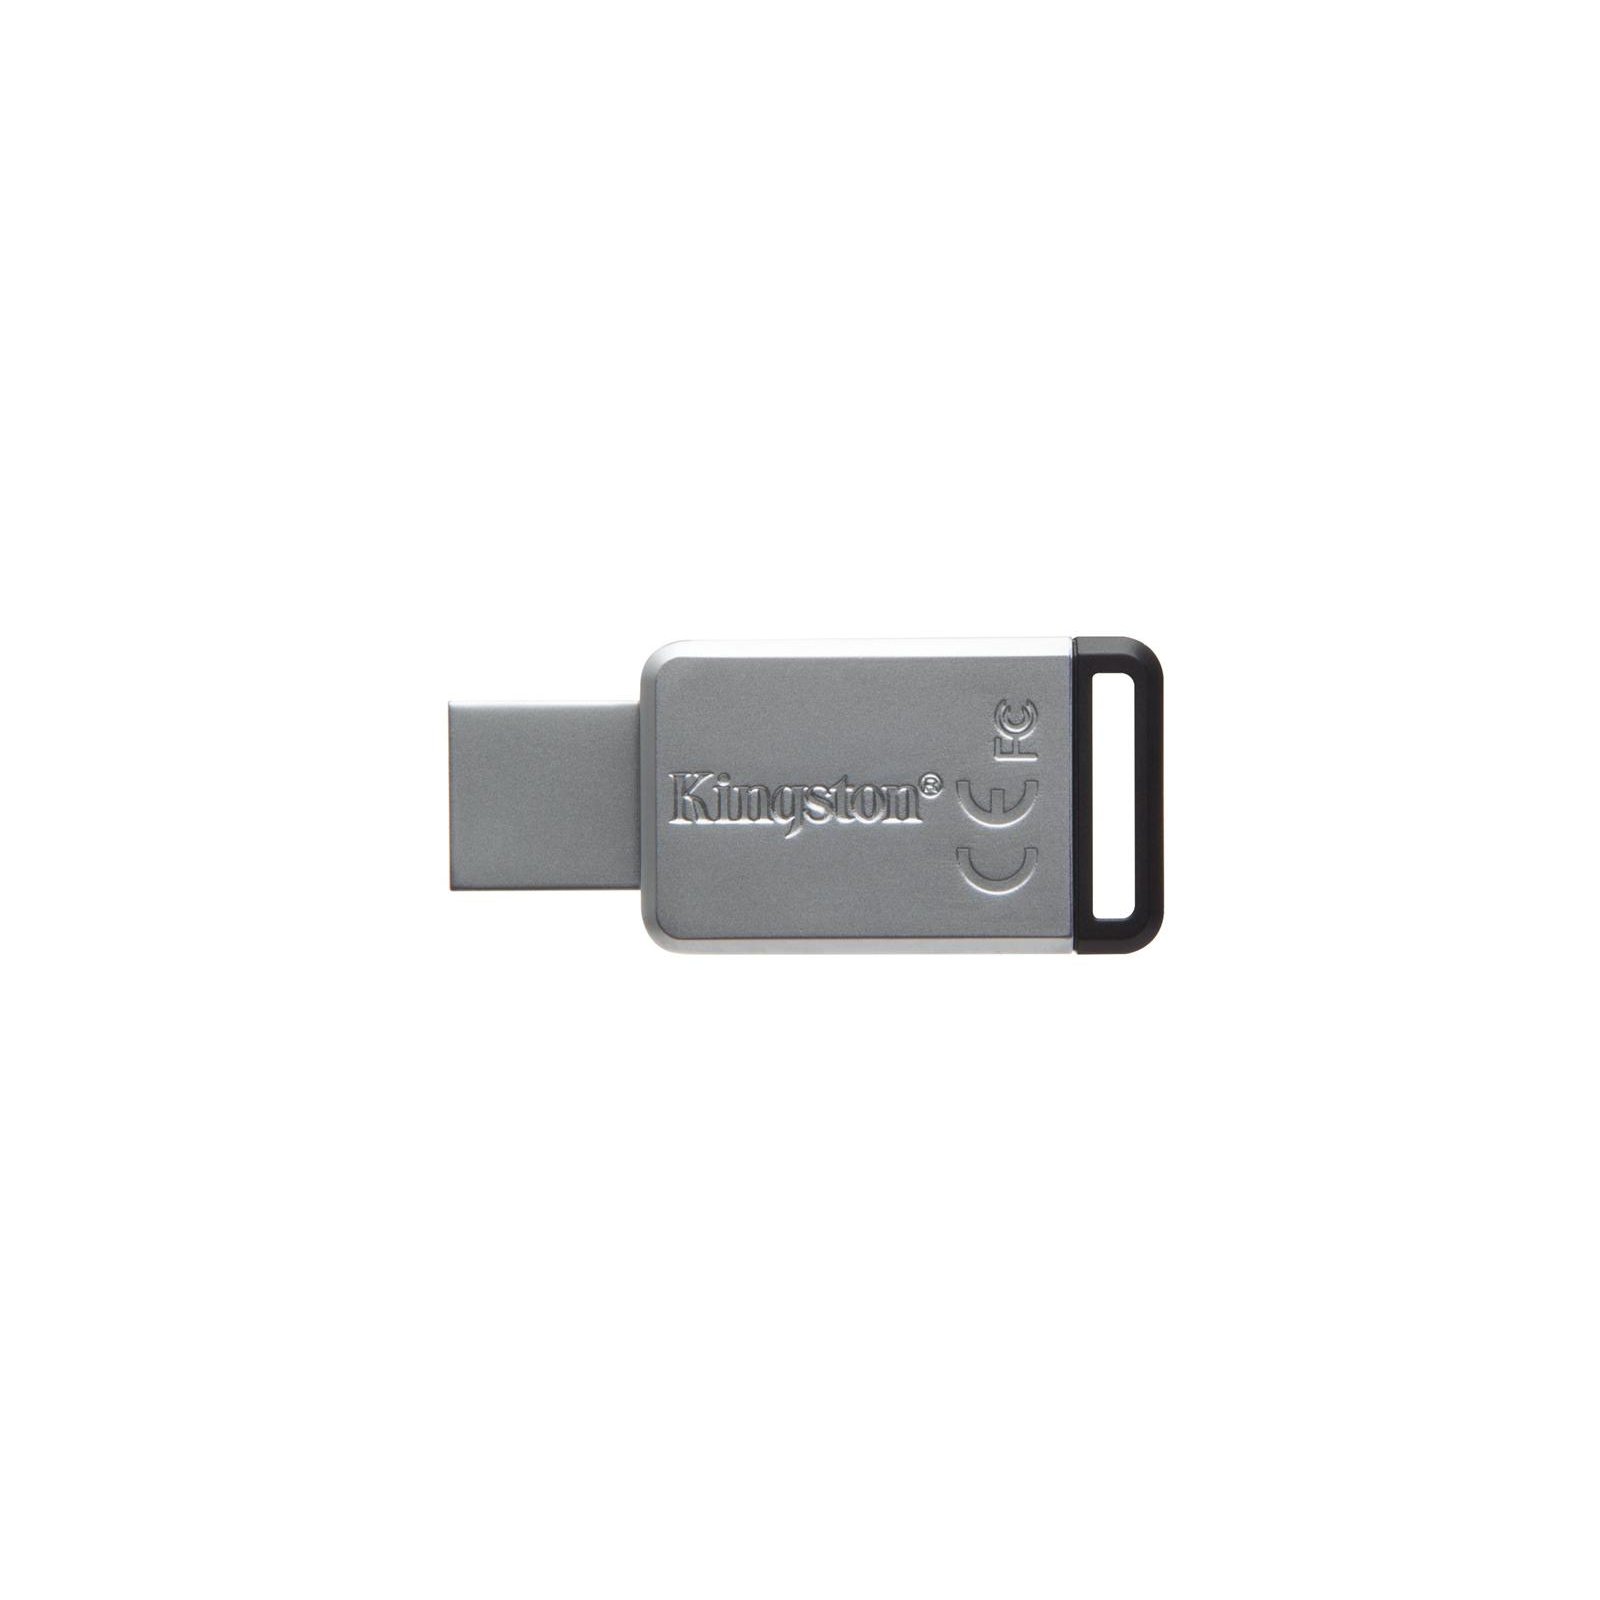 USB флеш накопитель Kingston 64GB DT50 USB 3.1 (DT50/64GB) изображение 2